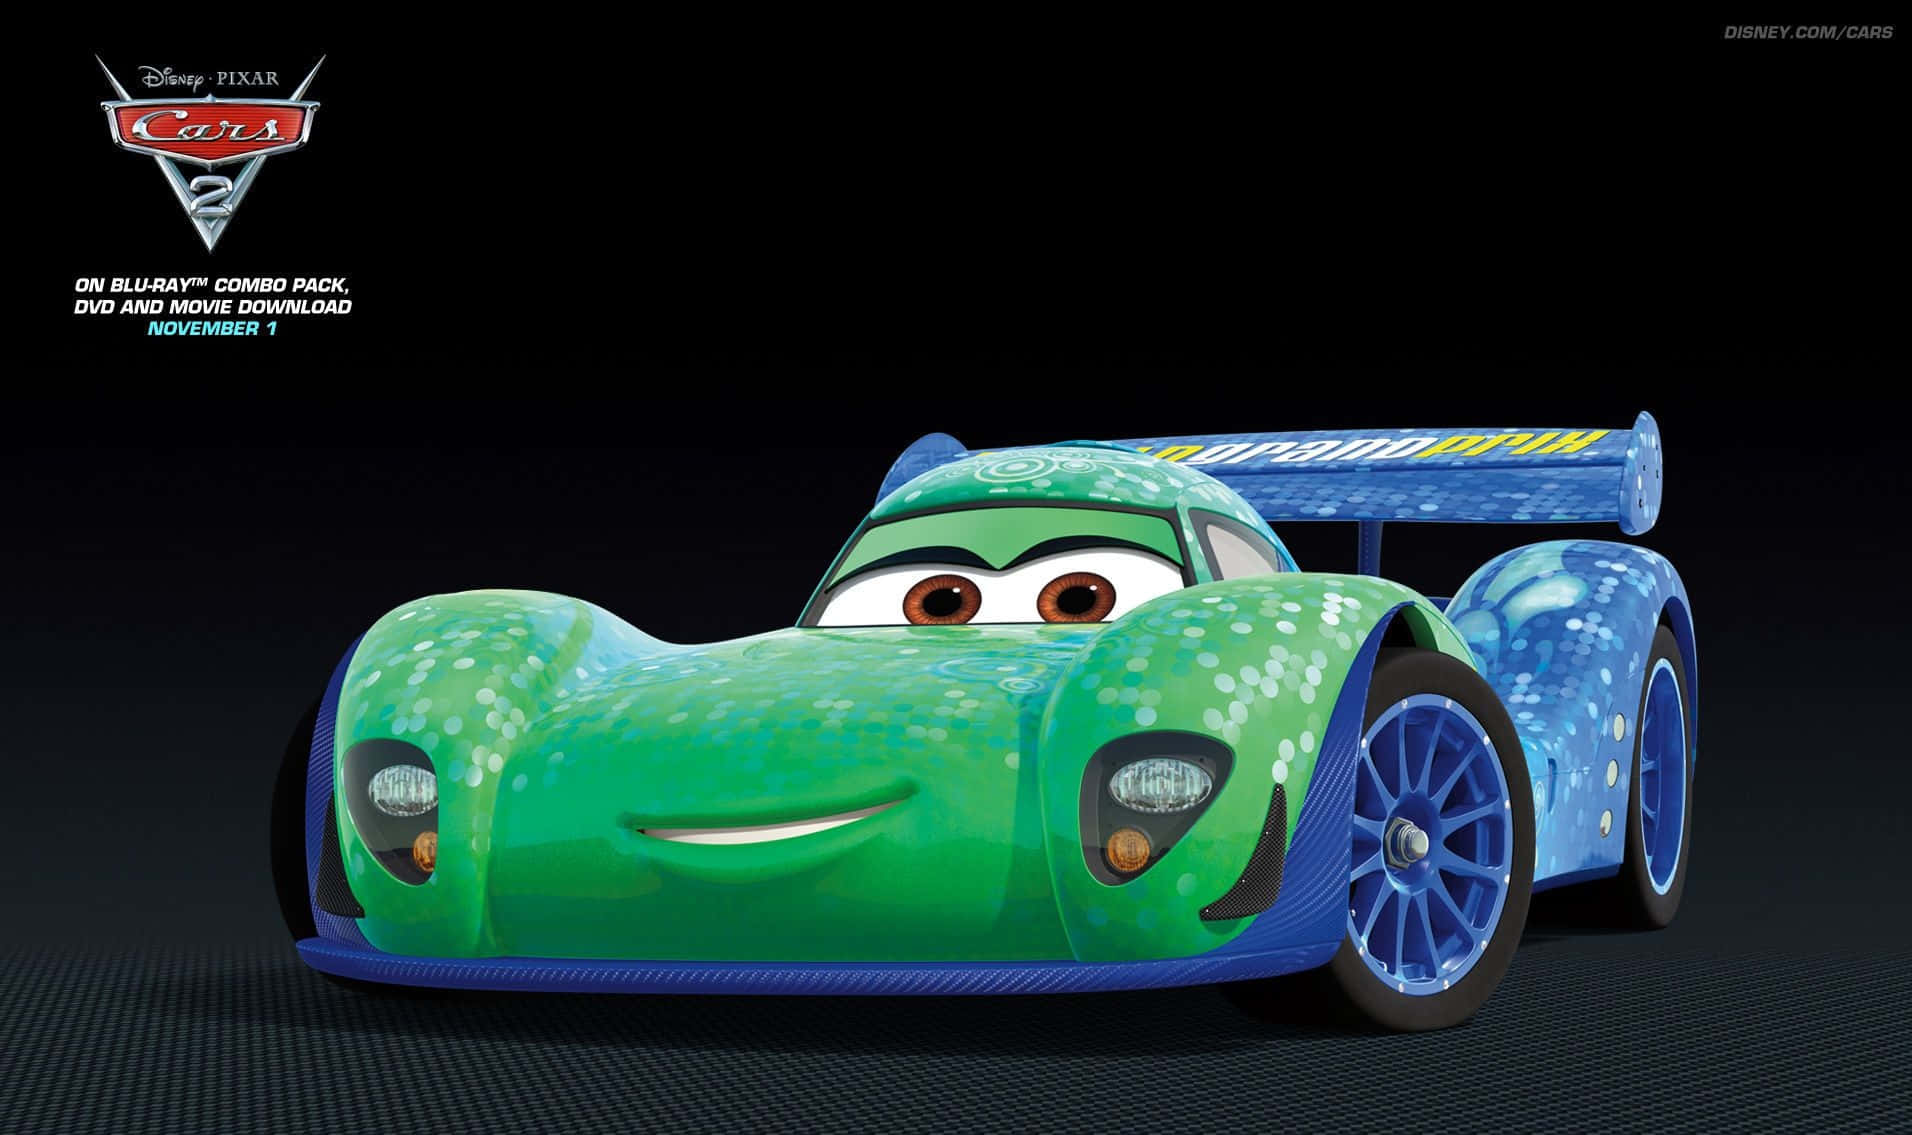 "Make racing fun for everyone with CARS 2!"